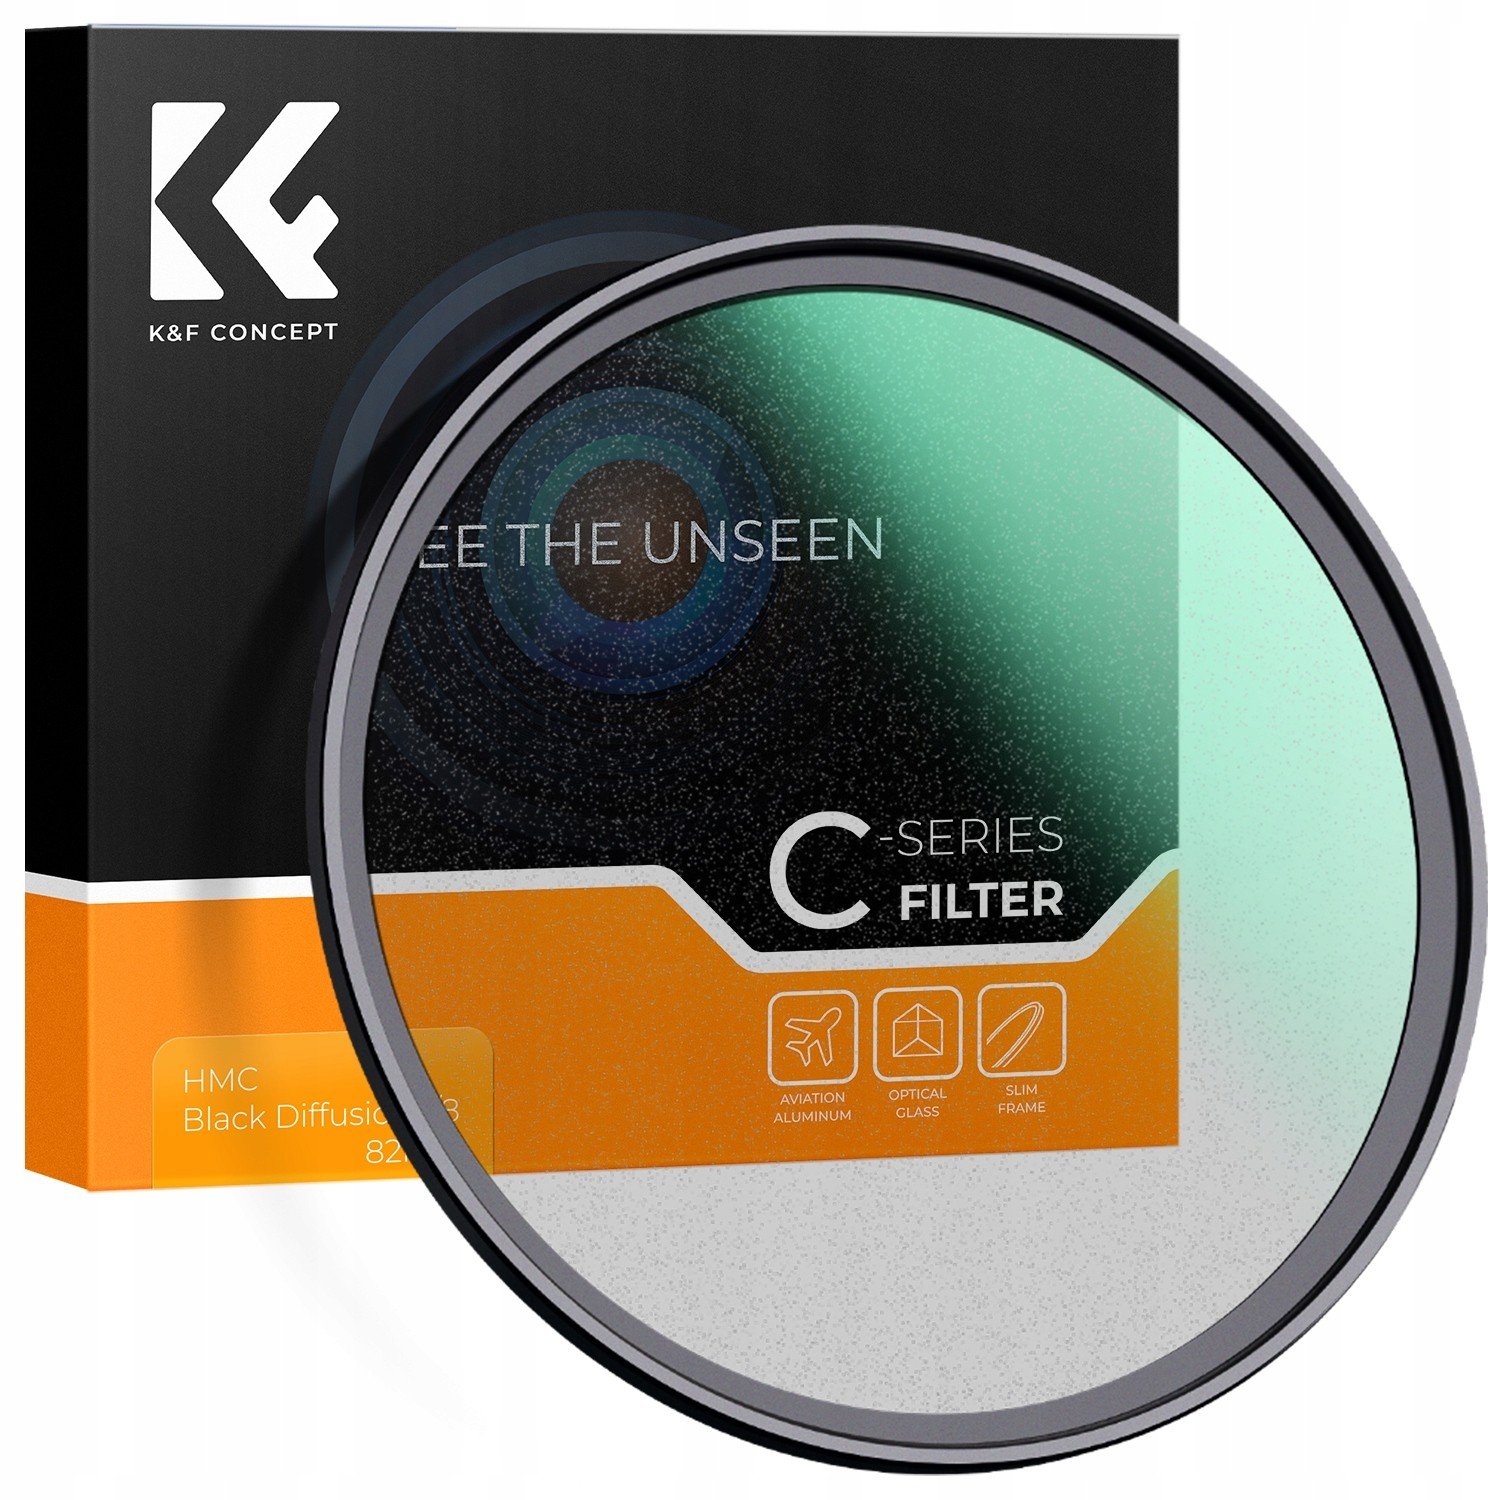 Difuzní filtr Black Mist 1/8 67mm Nano-C K&f